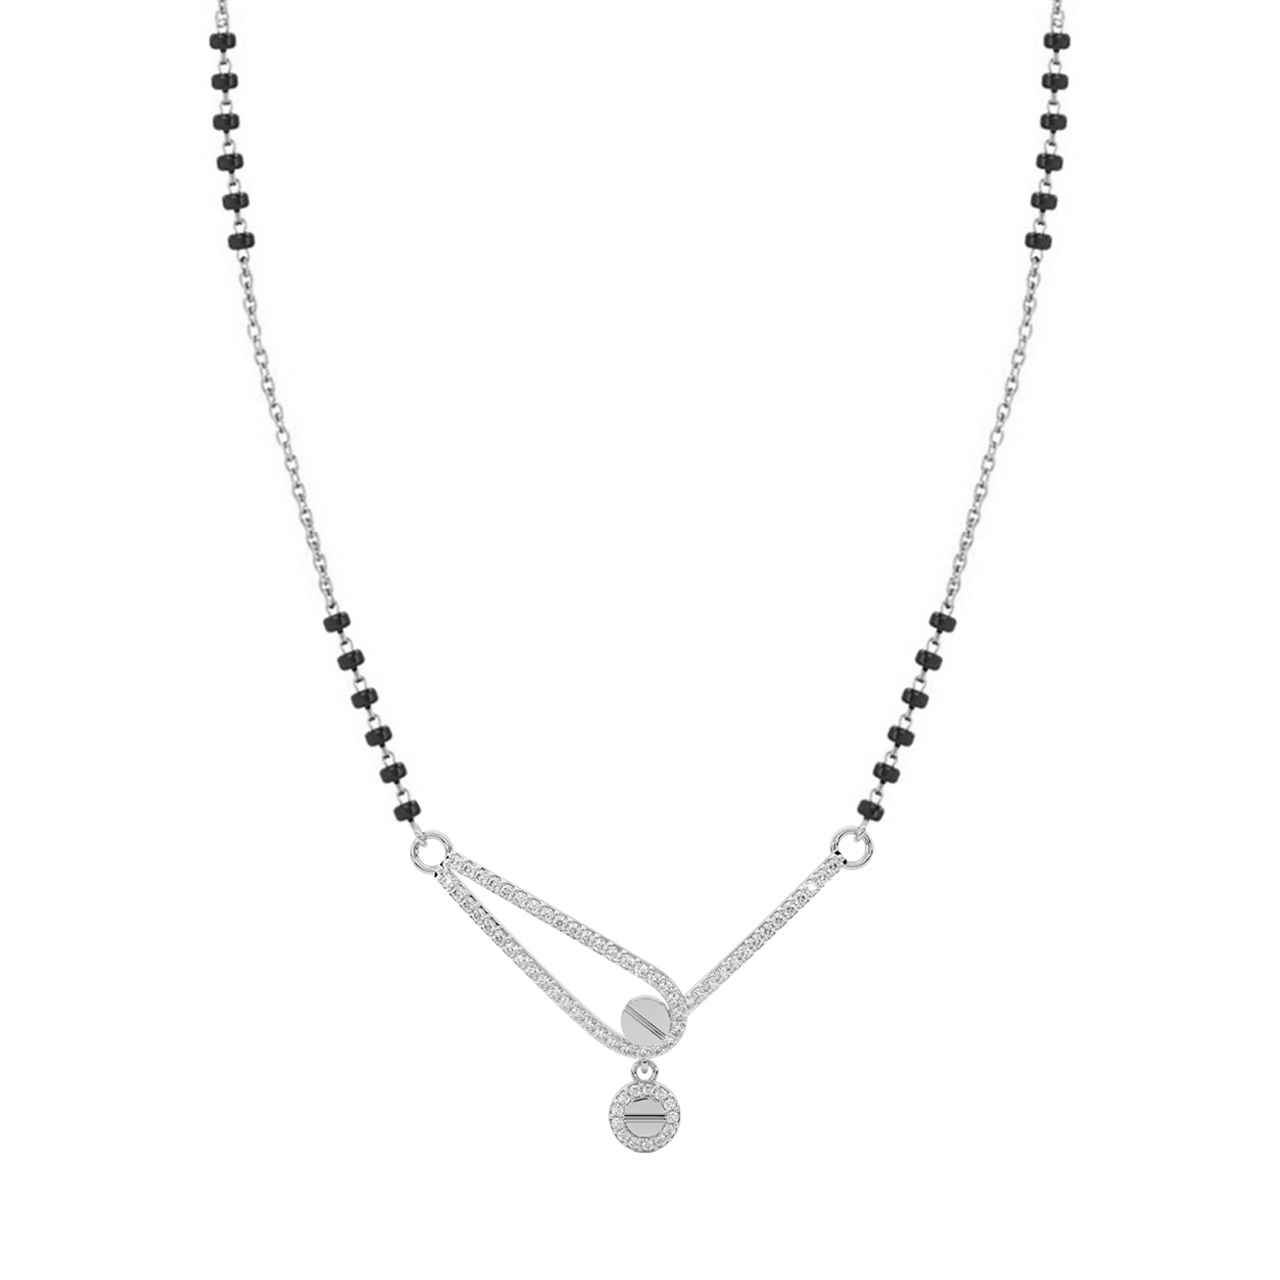 Diamond Mangalsutra Design With Chain